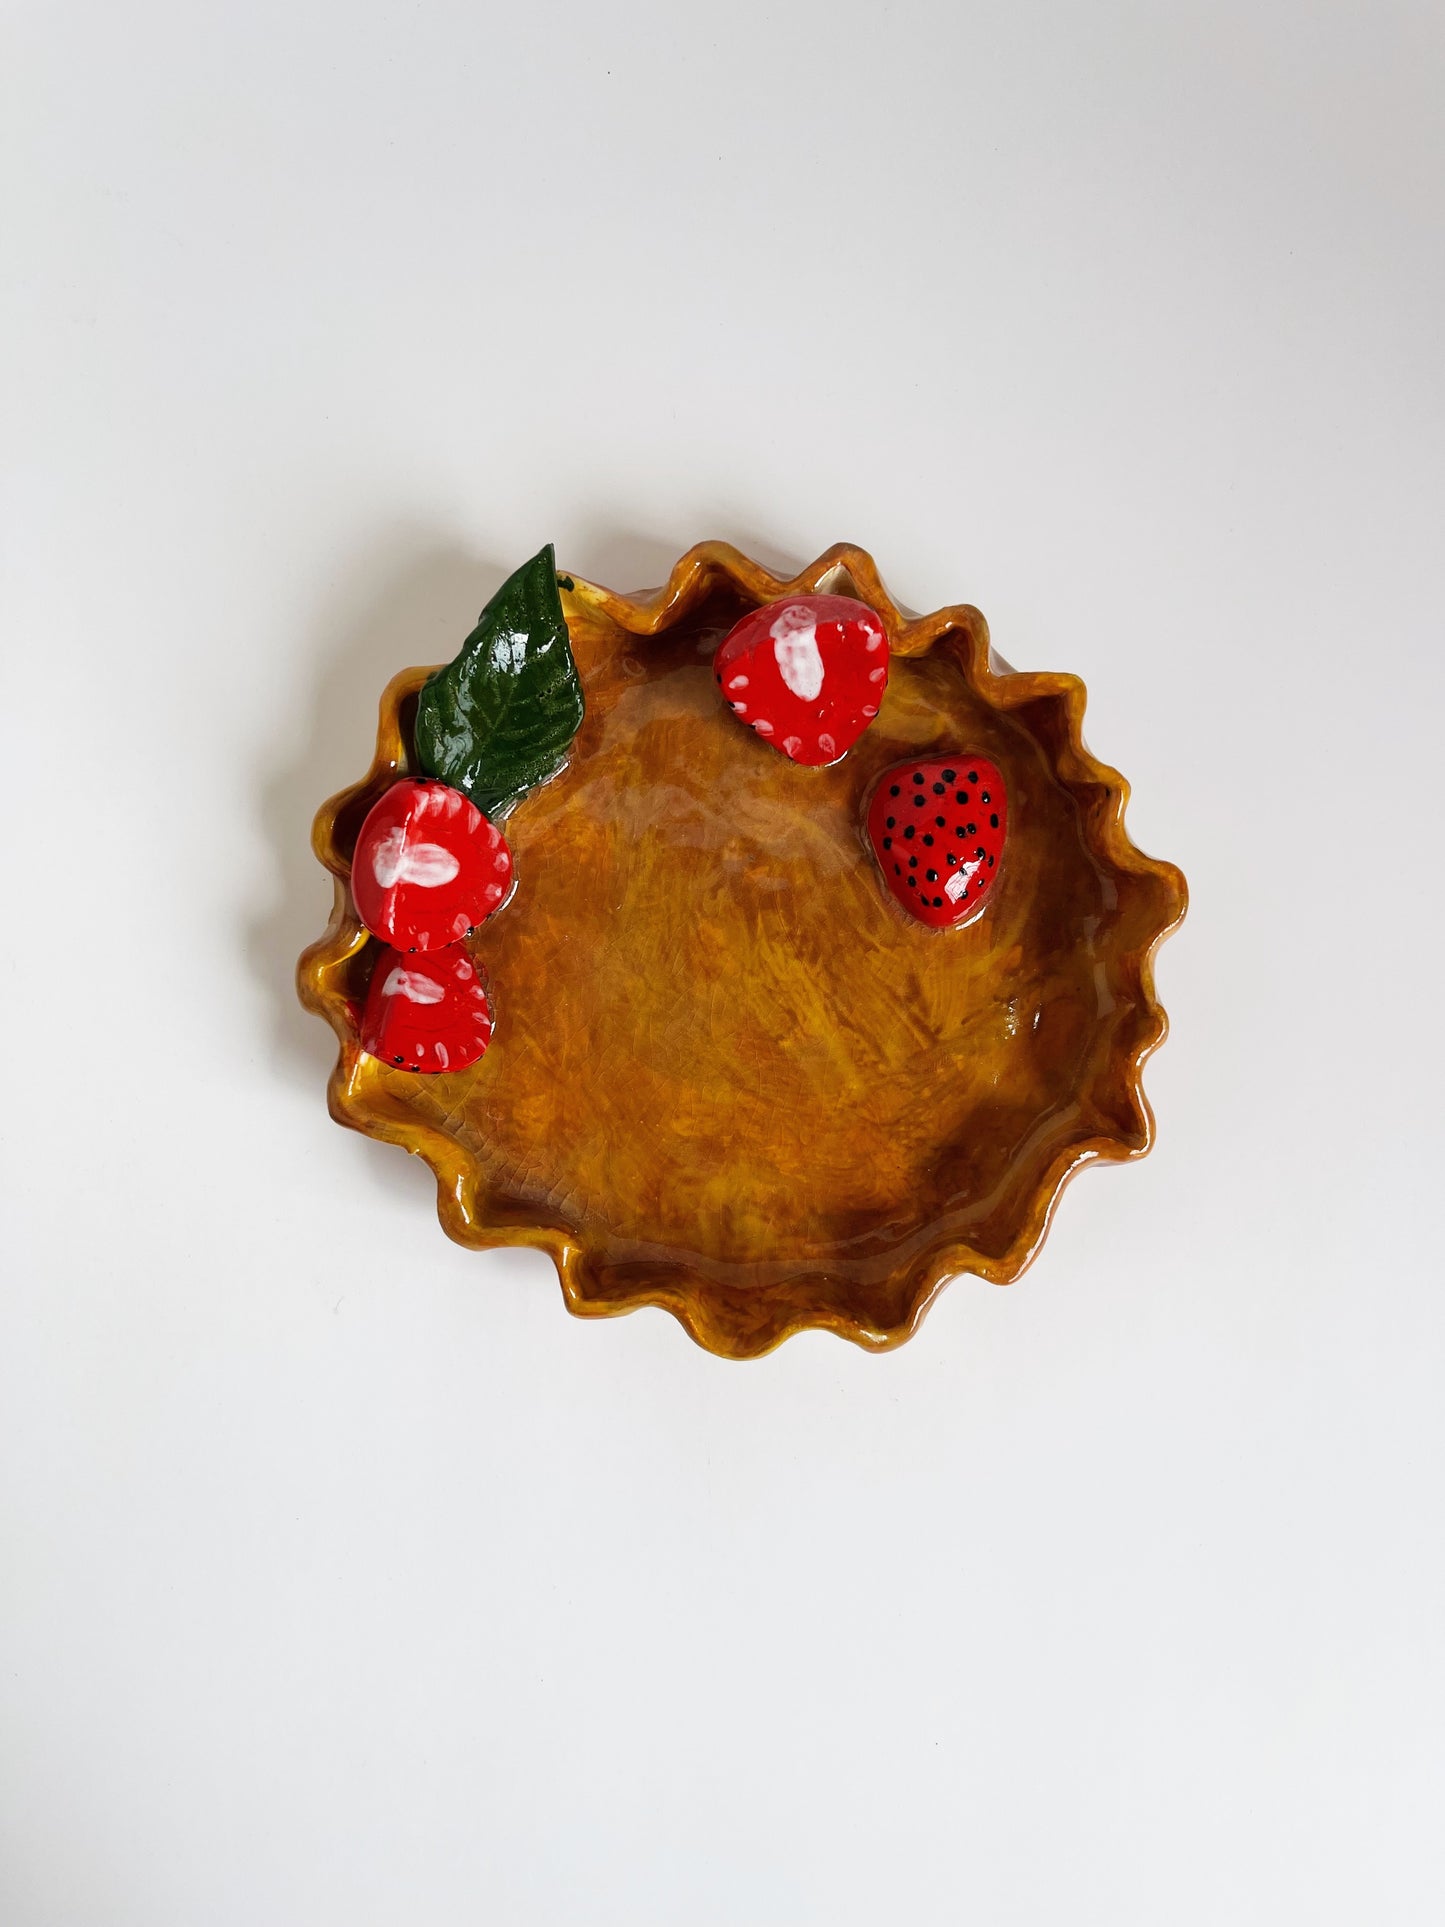 Tiny Pie Dish | Jessica Walker